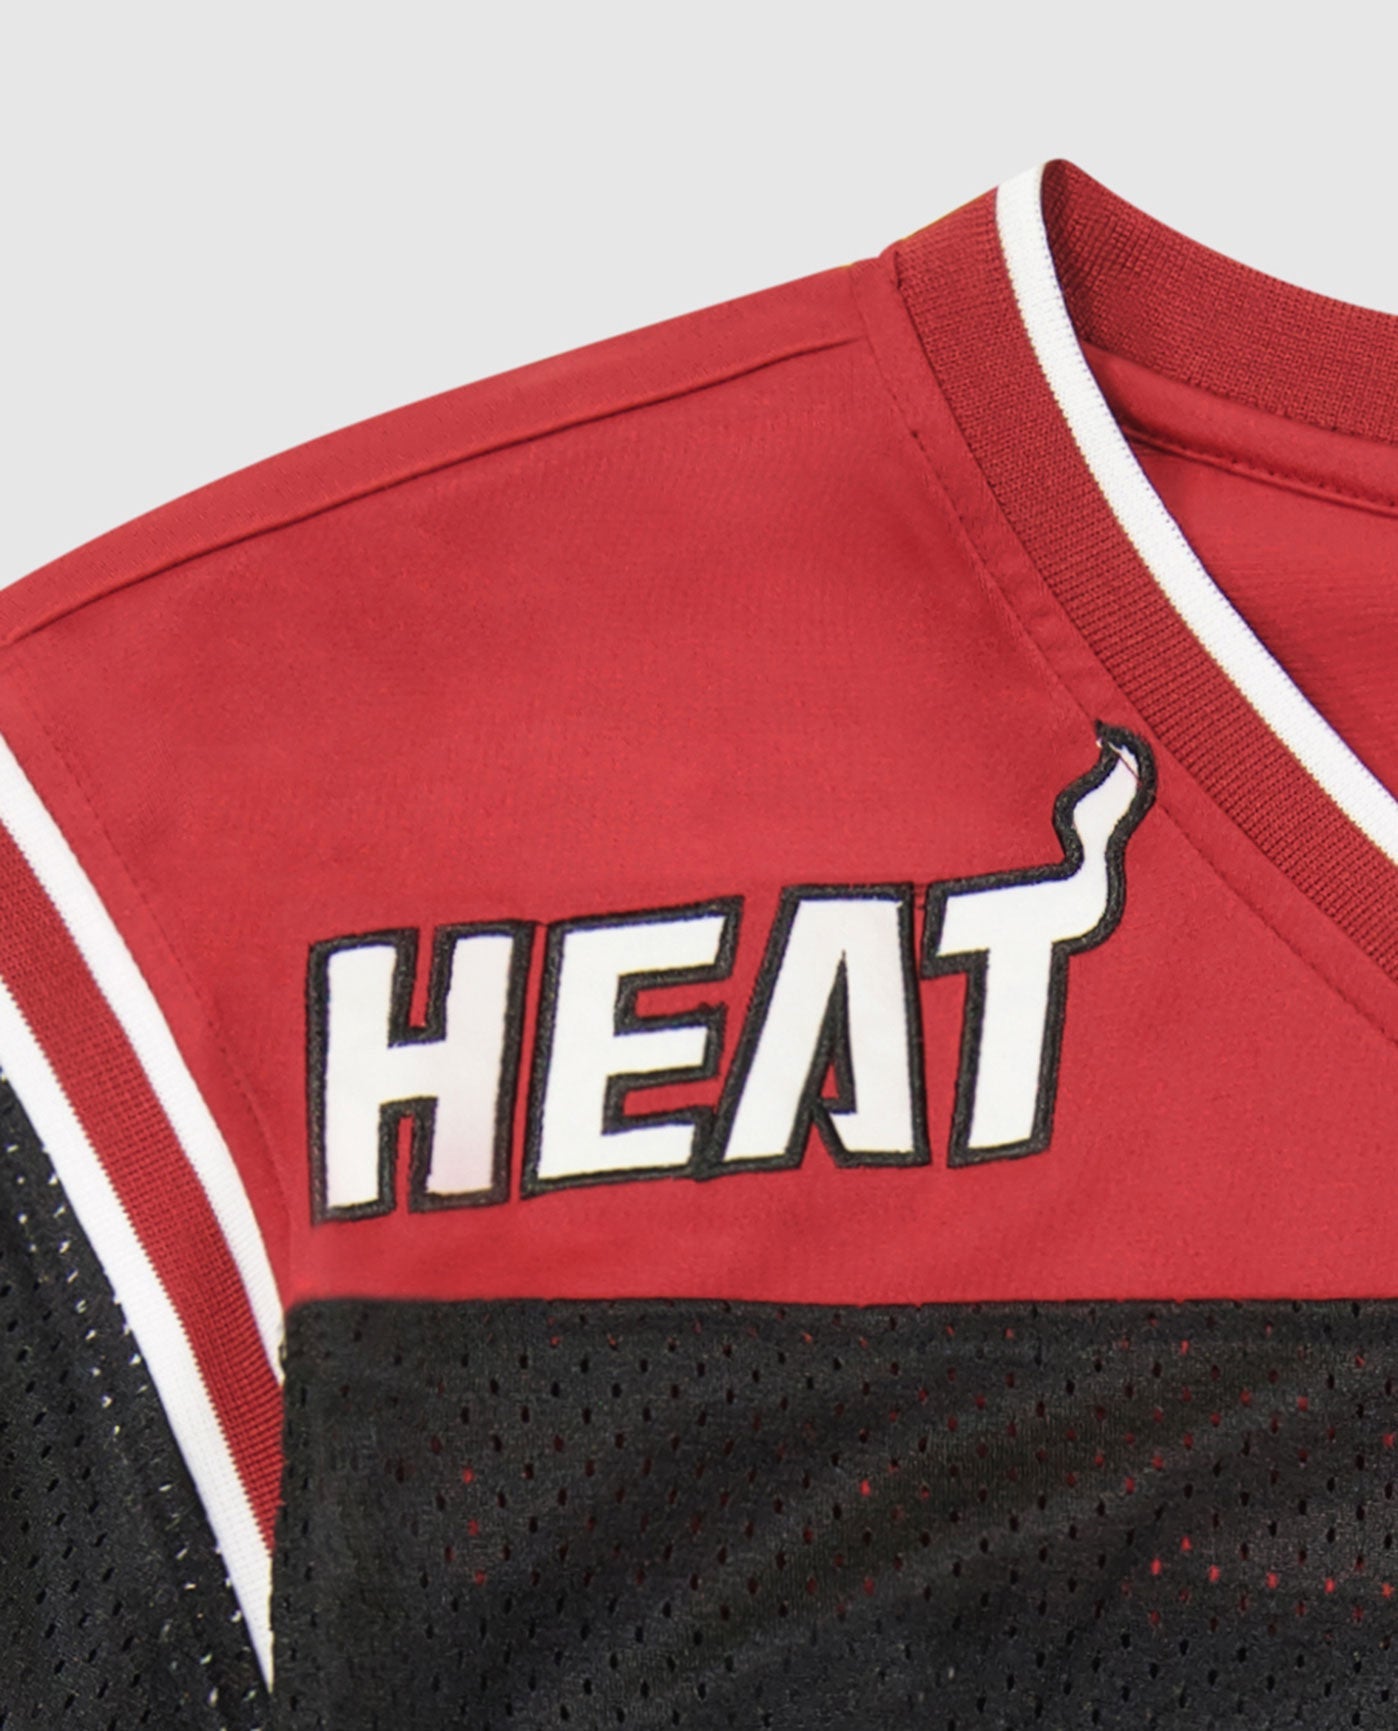 Buy jersey Miami Heat Red Zone